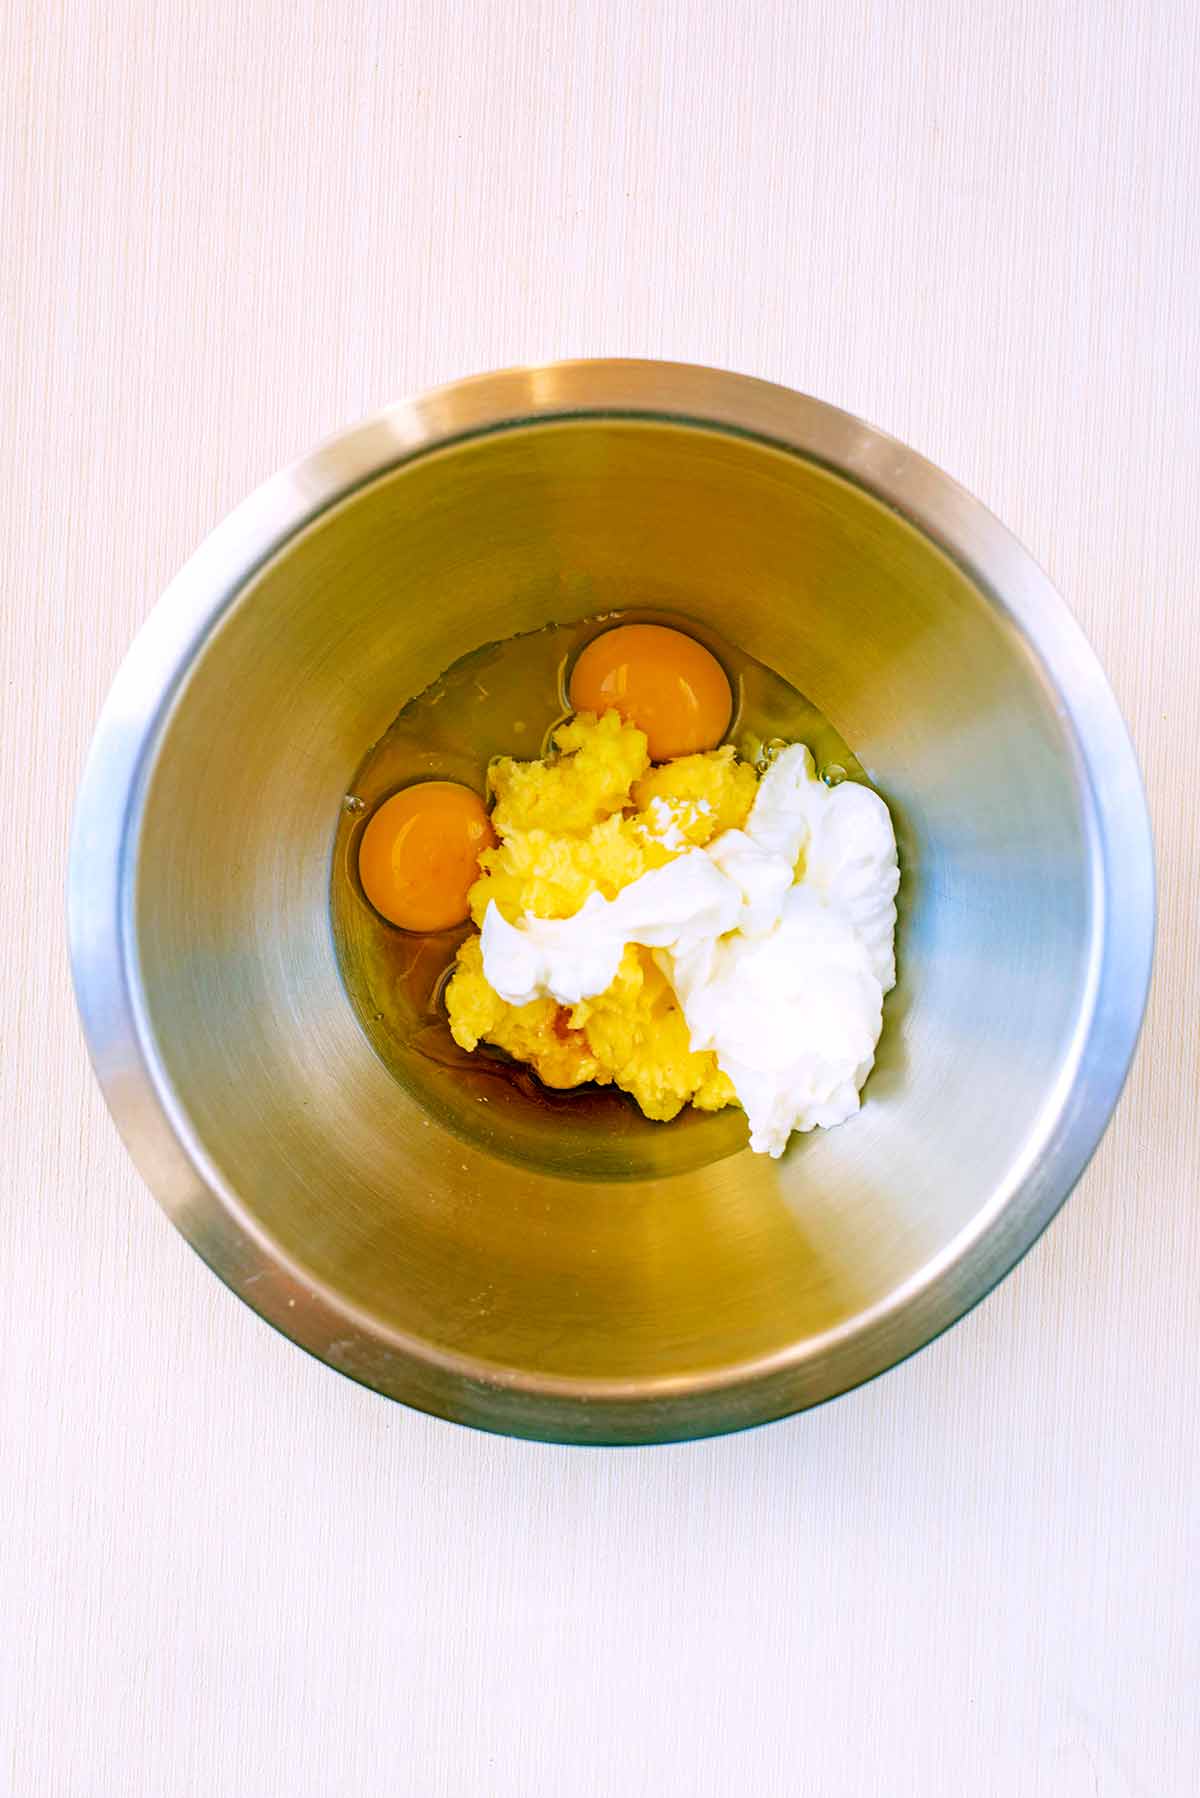 Eggs, vanilla and yogurt added to the bowl.